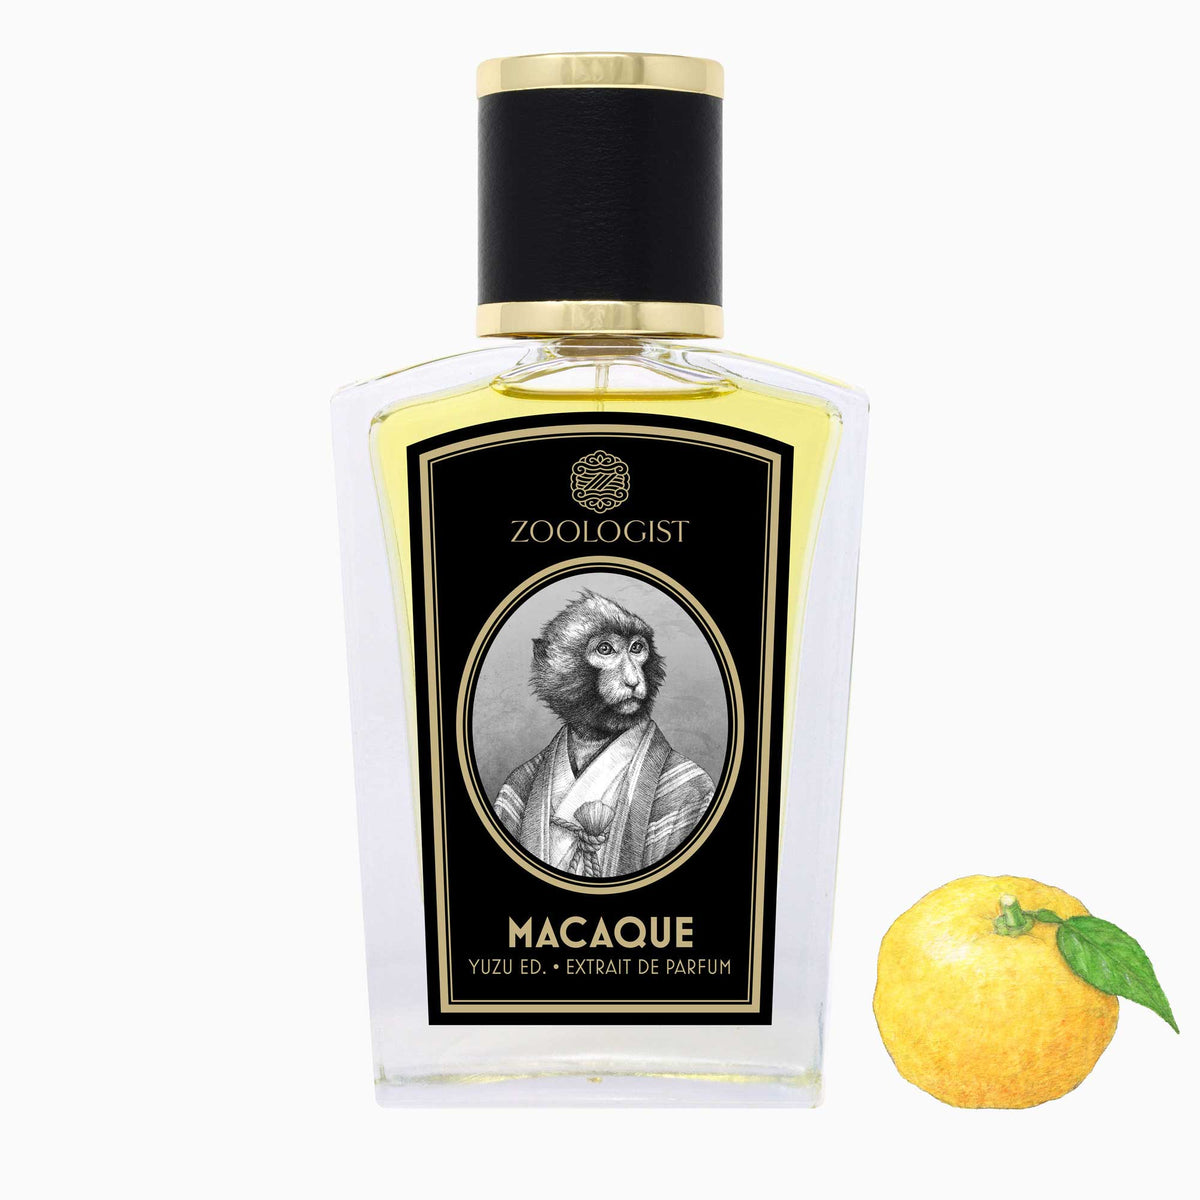 zoologist macaque yuzu edition ekstrakt perfum 60 ml   